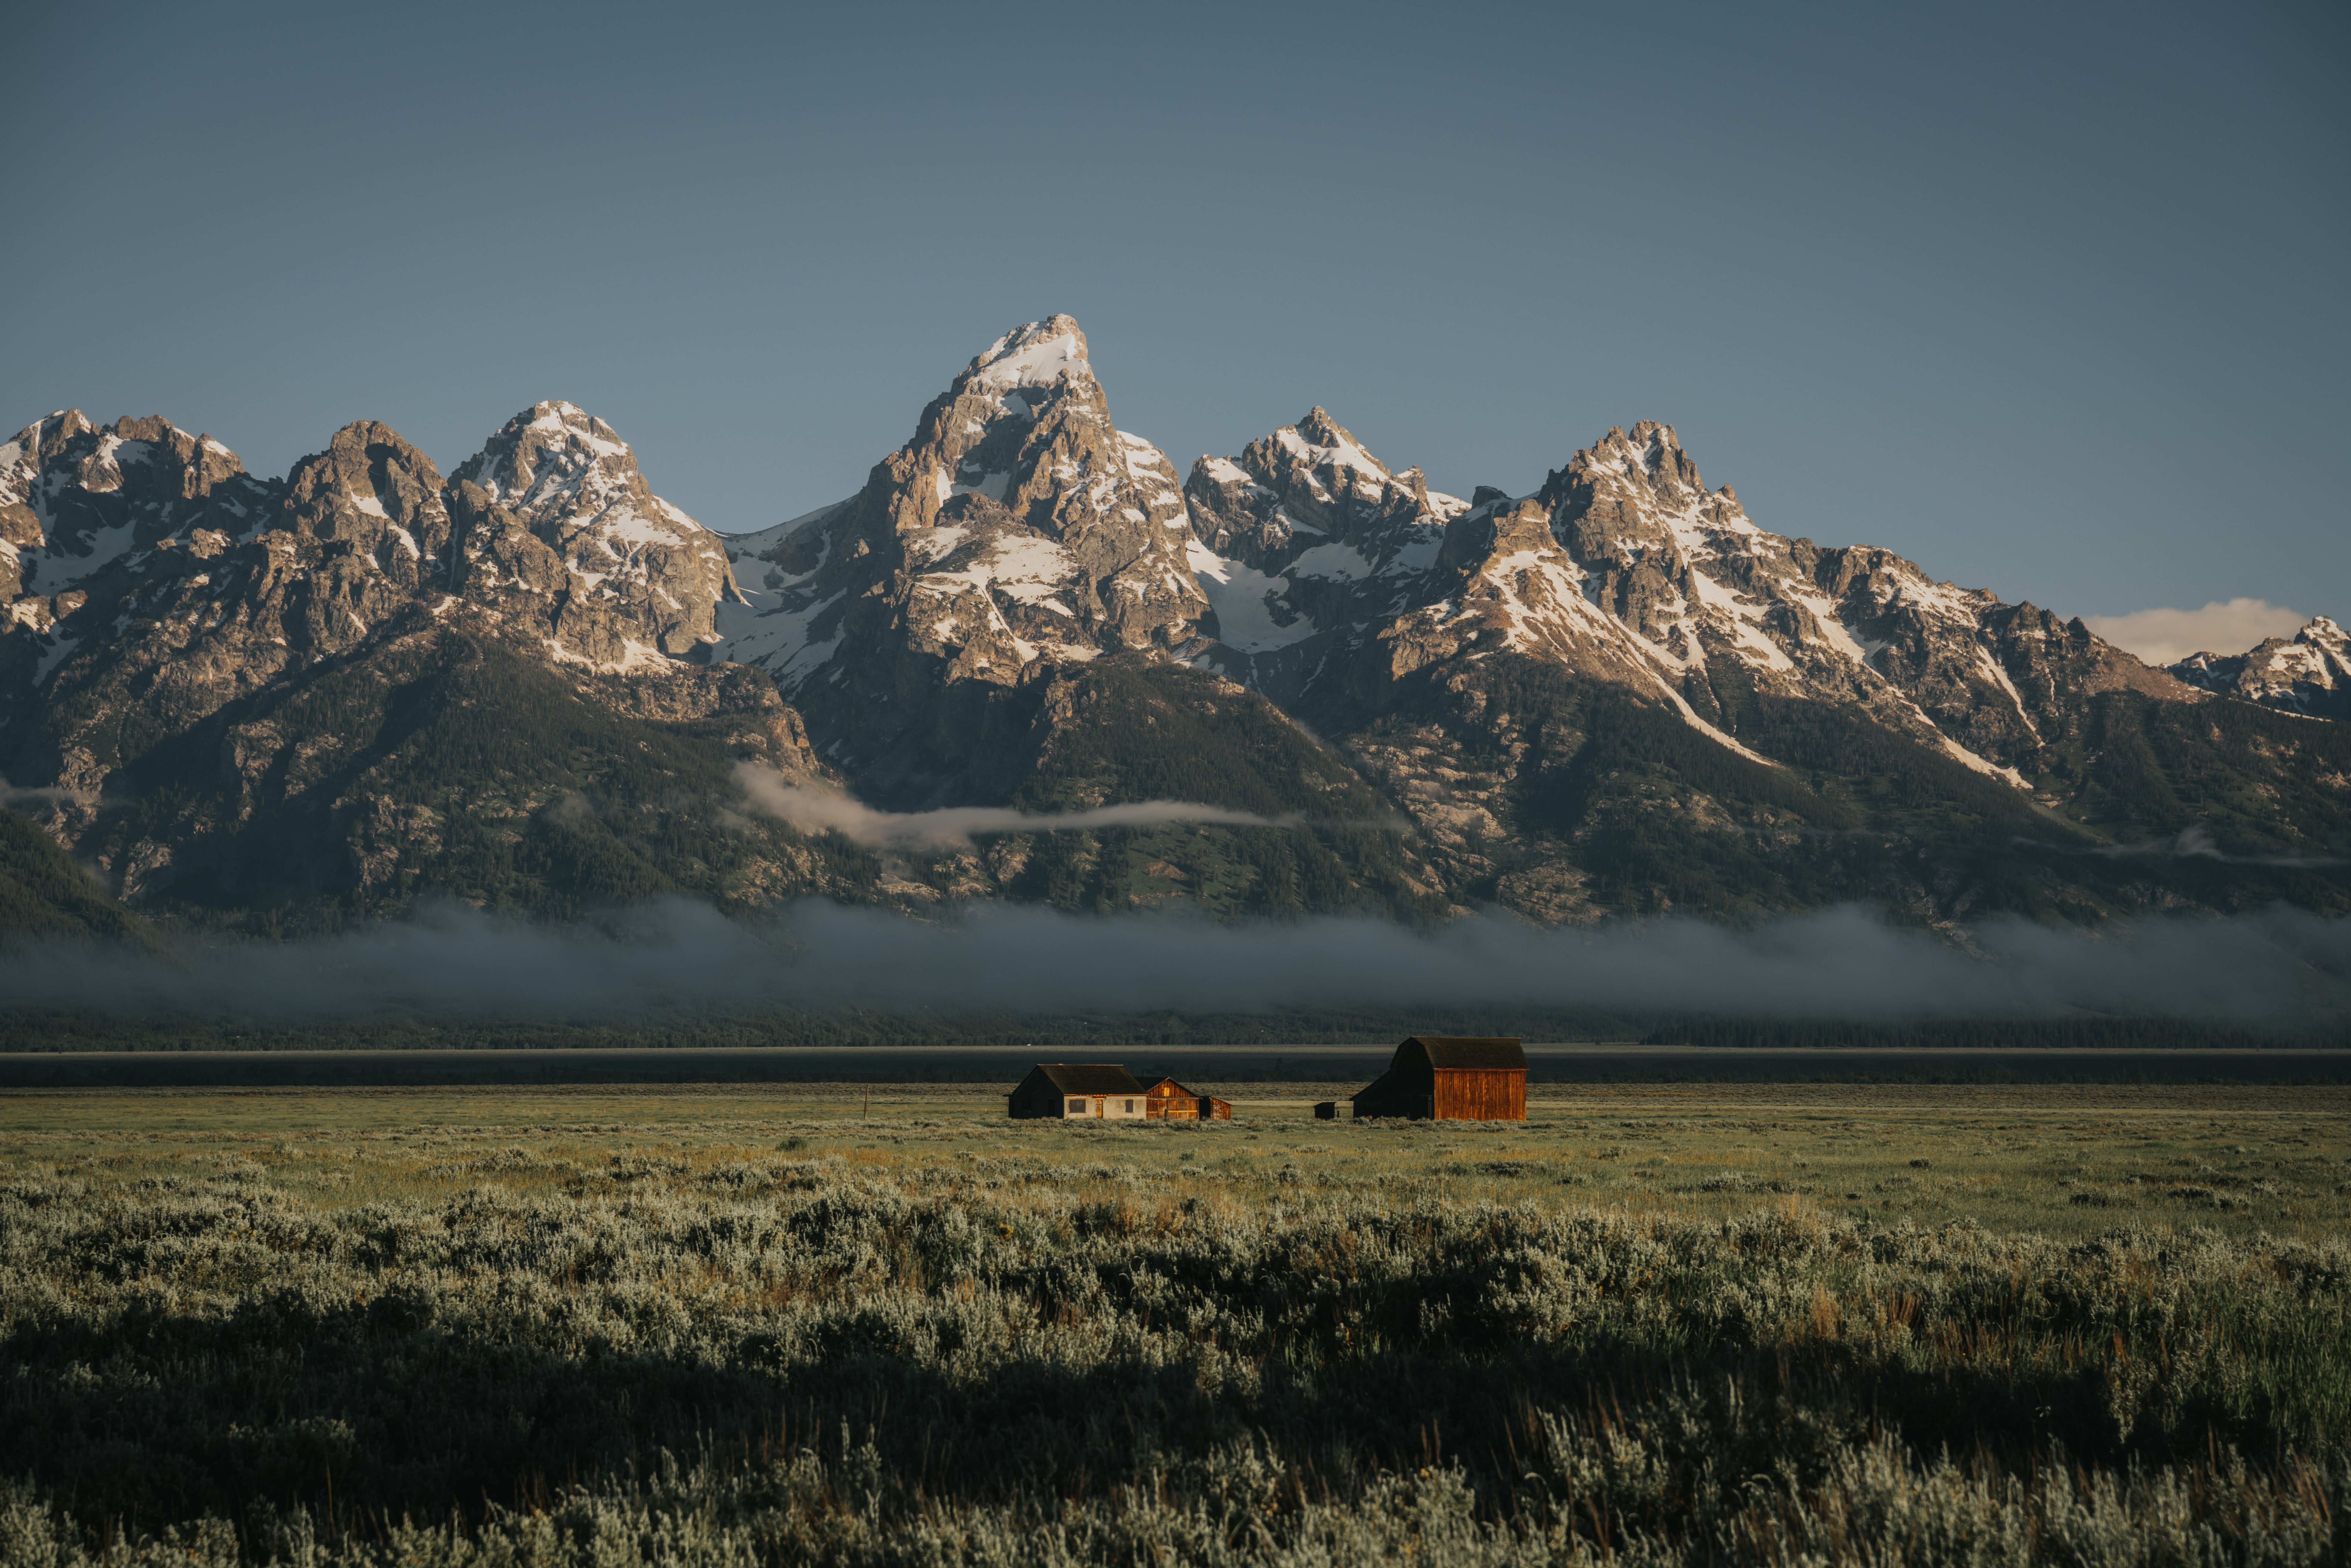 Wyoming photo by Brady Stoeltzing on Unsplash